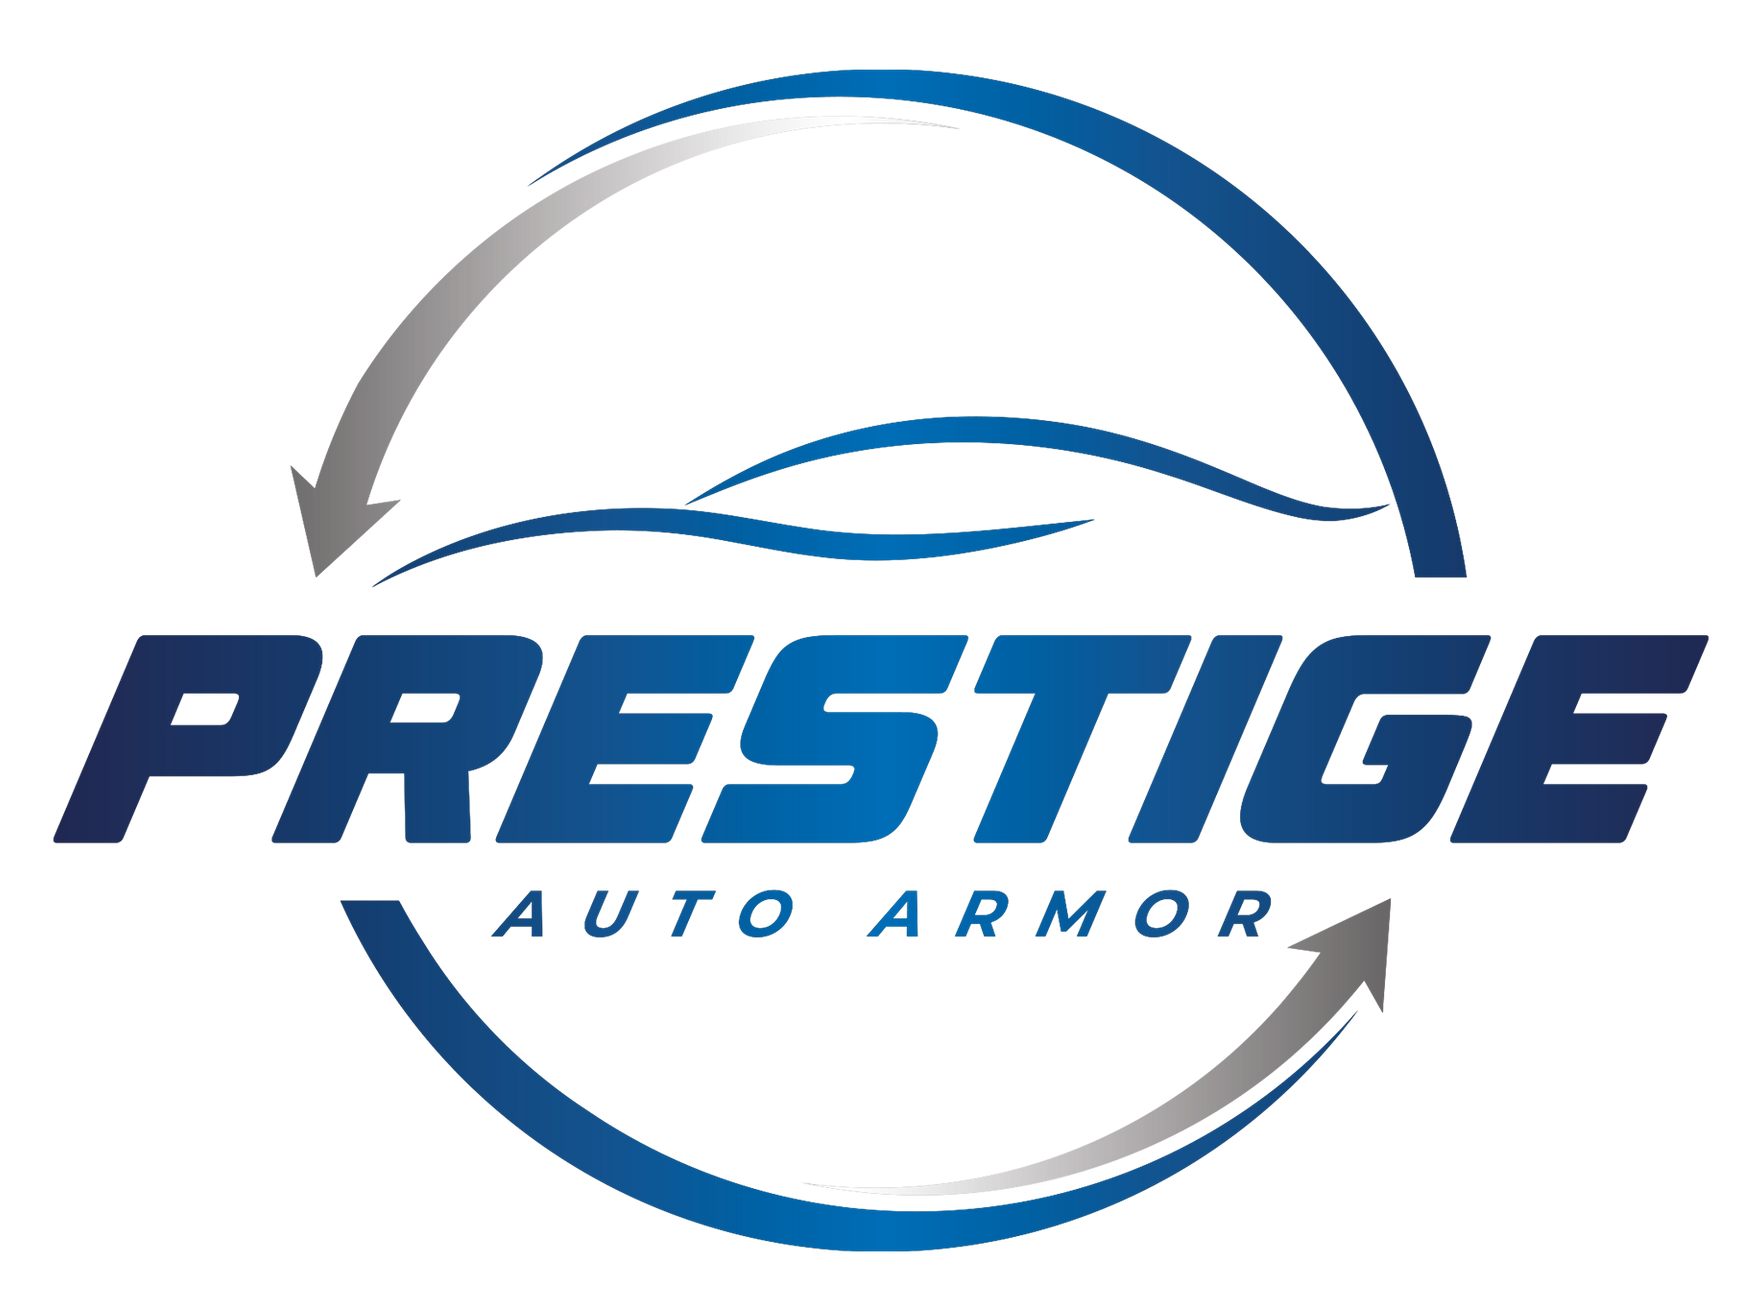 Prestige Auto Armor